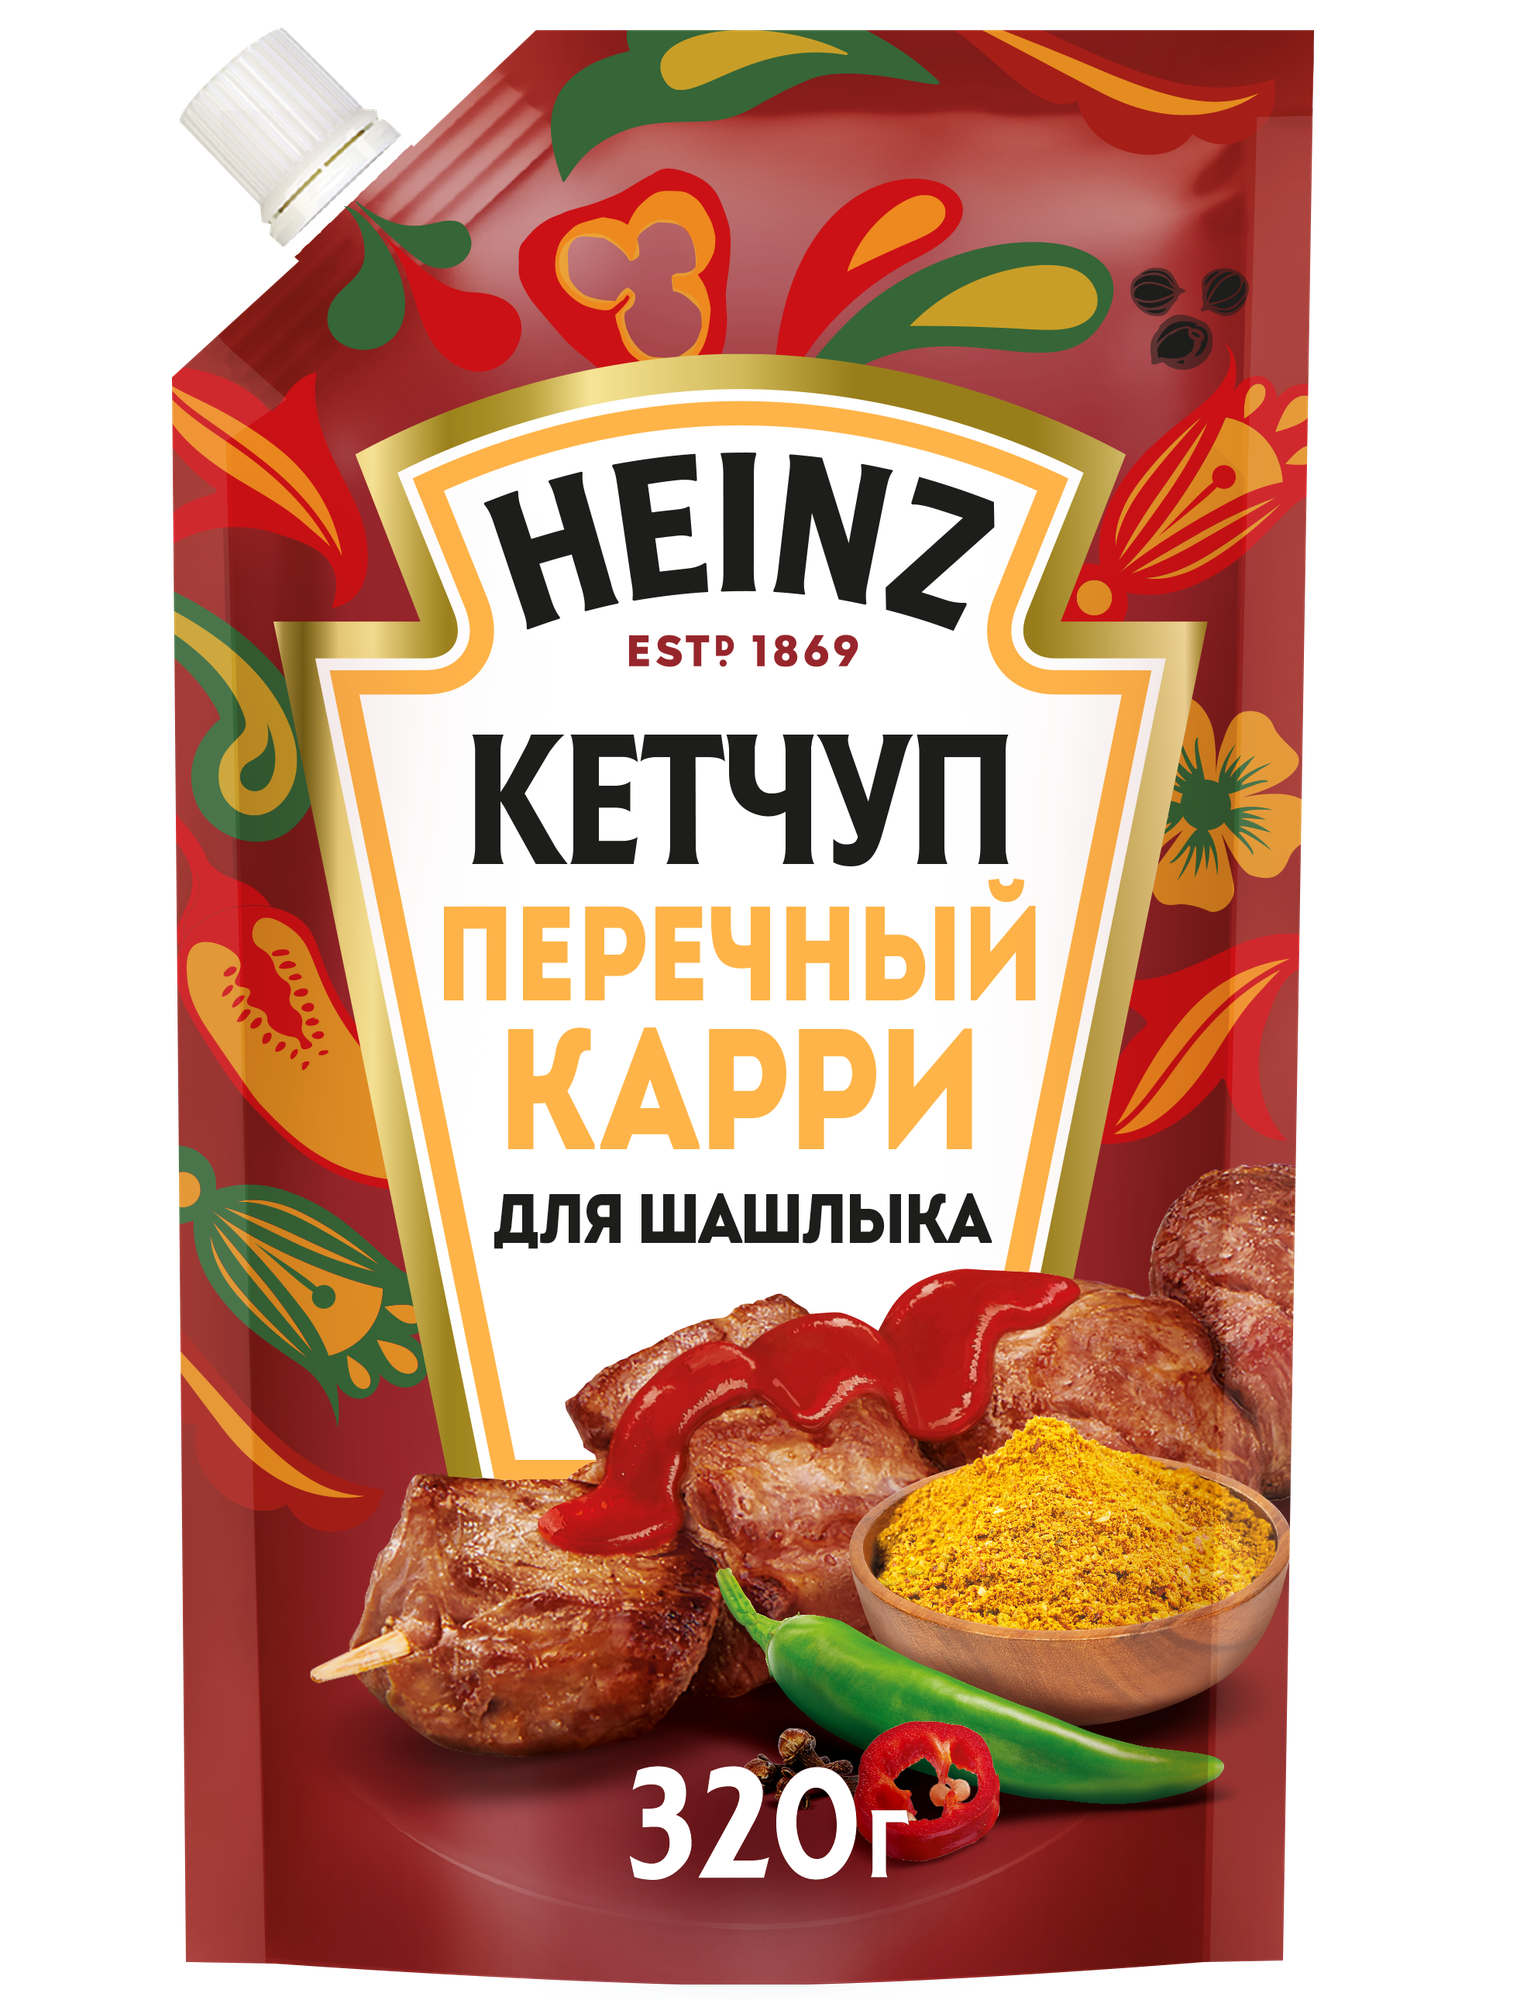 Heinz - кетчуп перечный Карри, 320 гр.